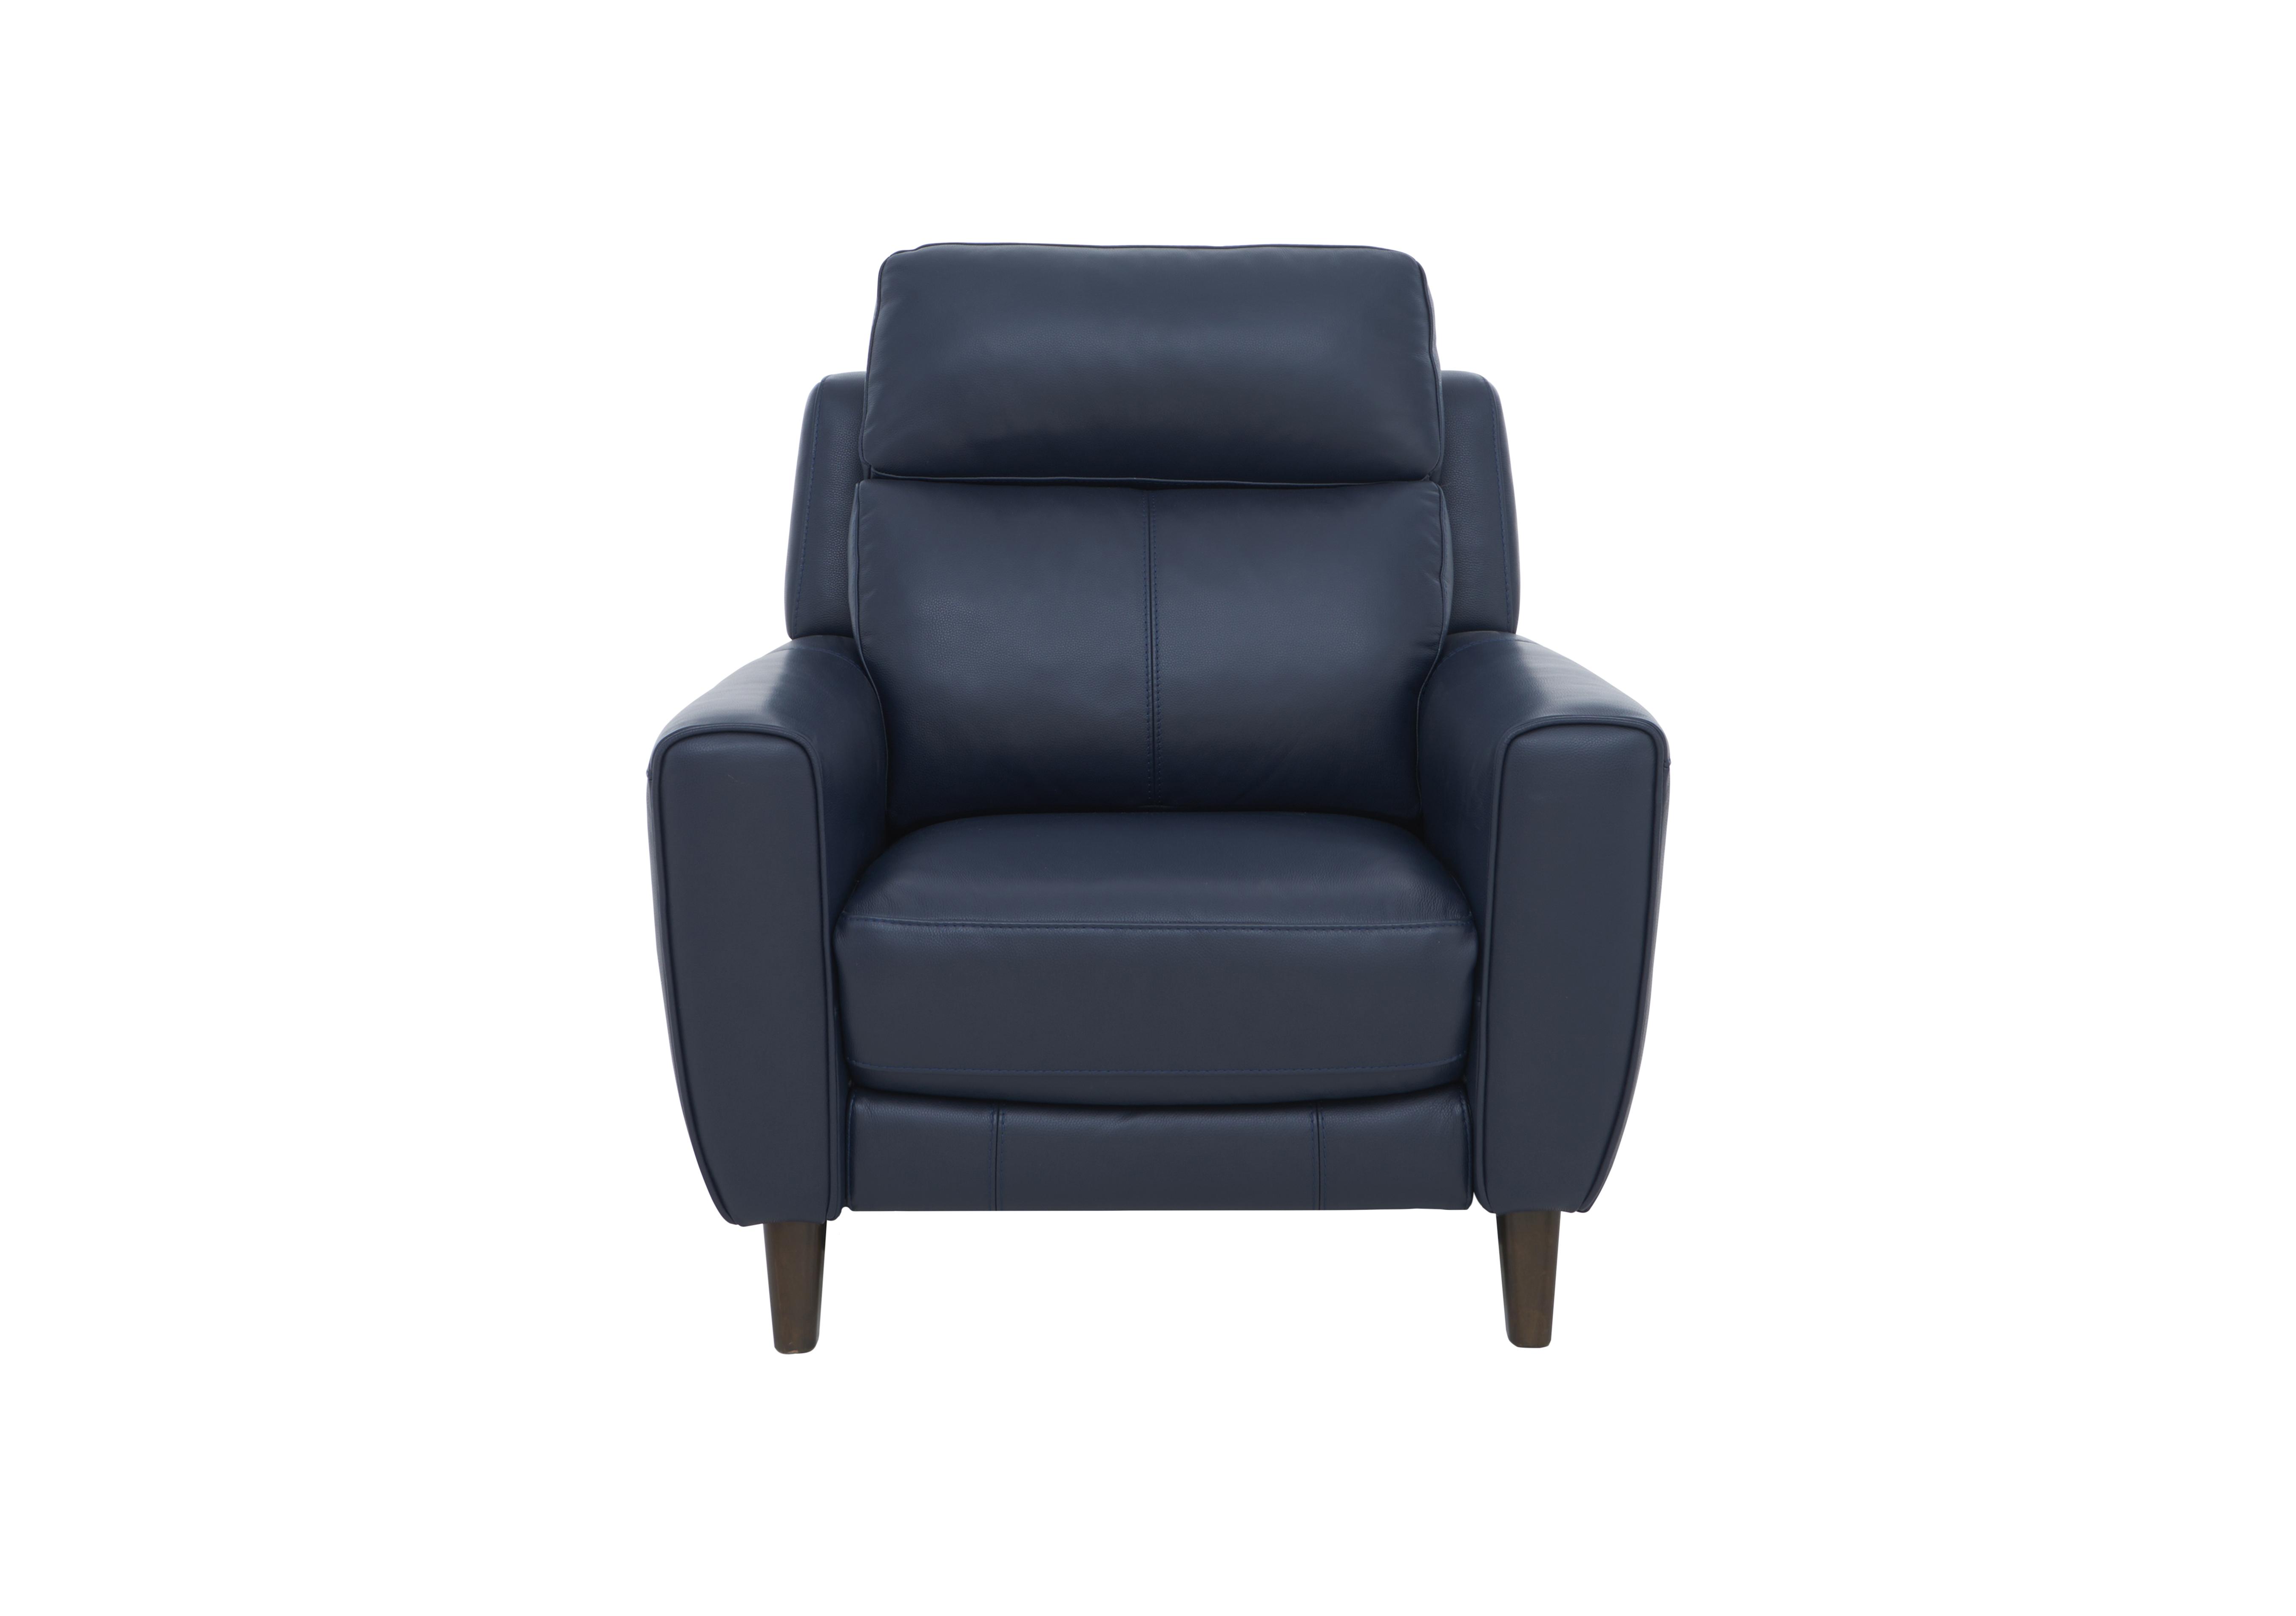 Zen Leather Power Recliner Chair with Power Headrest in Bx-036c Navy on Furniture Village